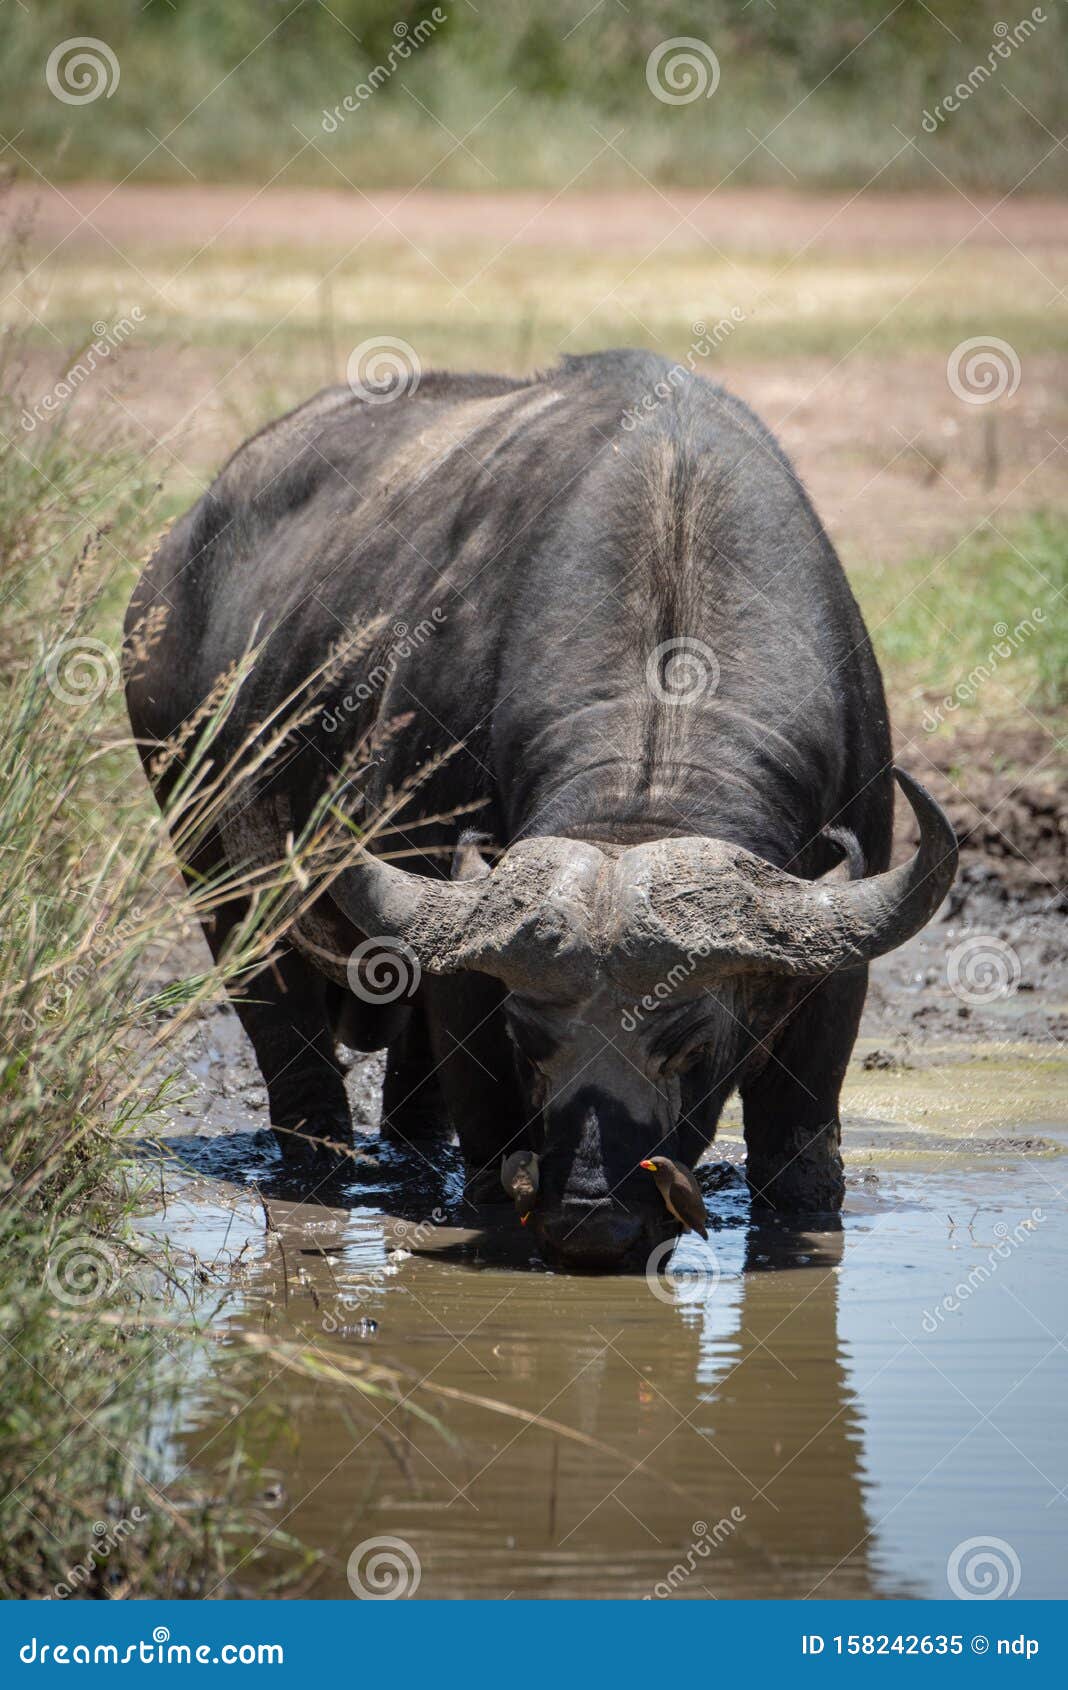 Cape Buffalo Drinking from Muddy Stock - Image of safari, 158242635